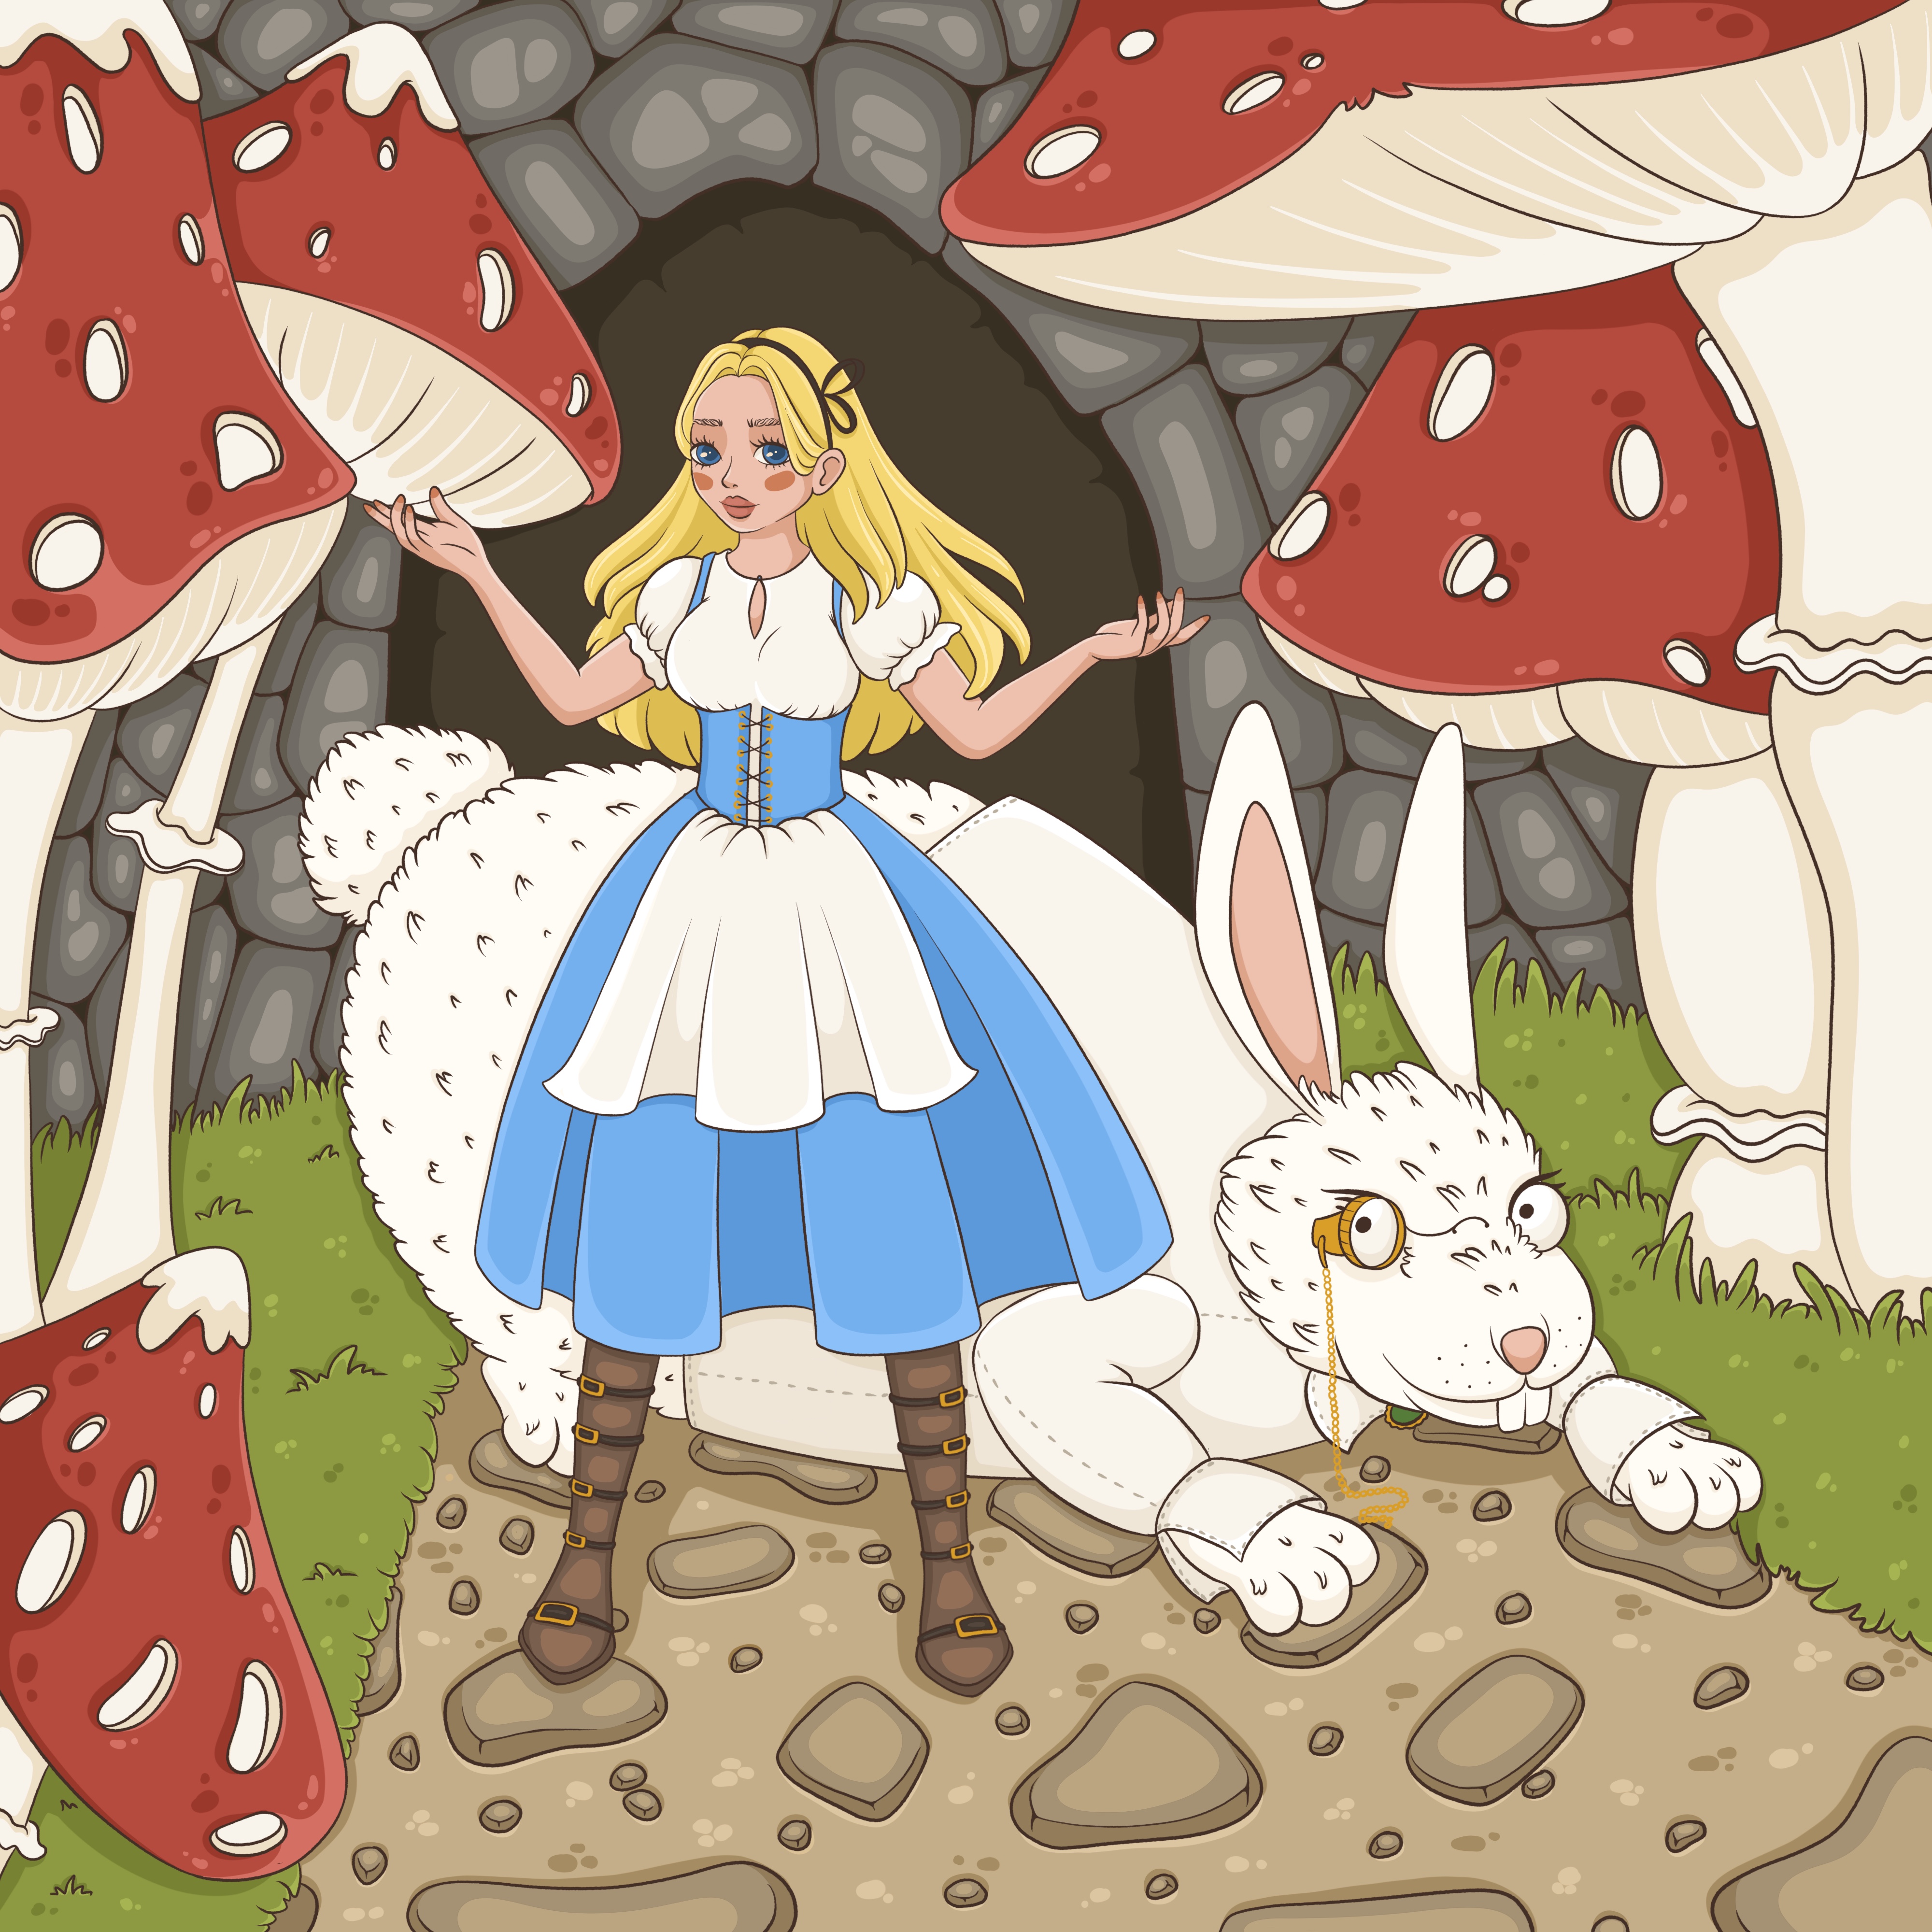 Иллюстрация Алиса в стране чу��ес, интерпретация. в стиле детский